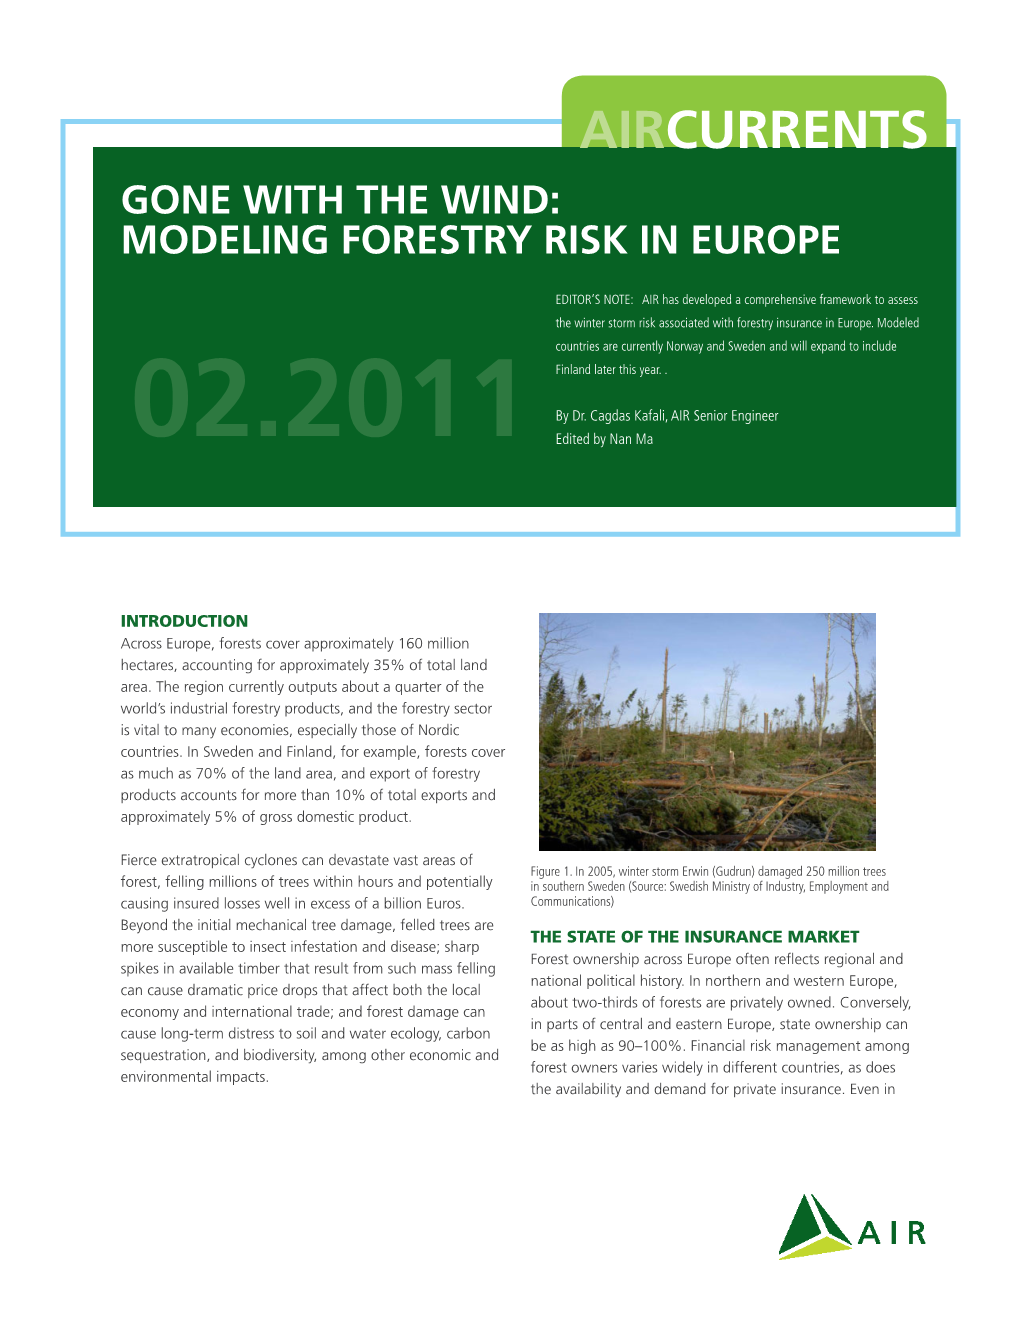 Modeling Forestry Risk in Europe